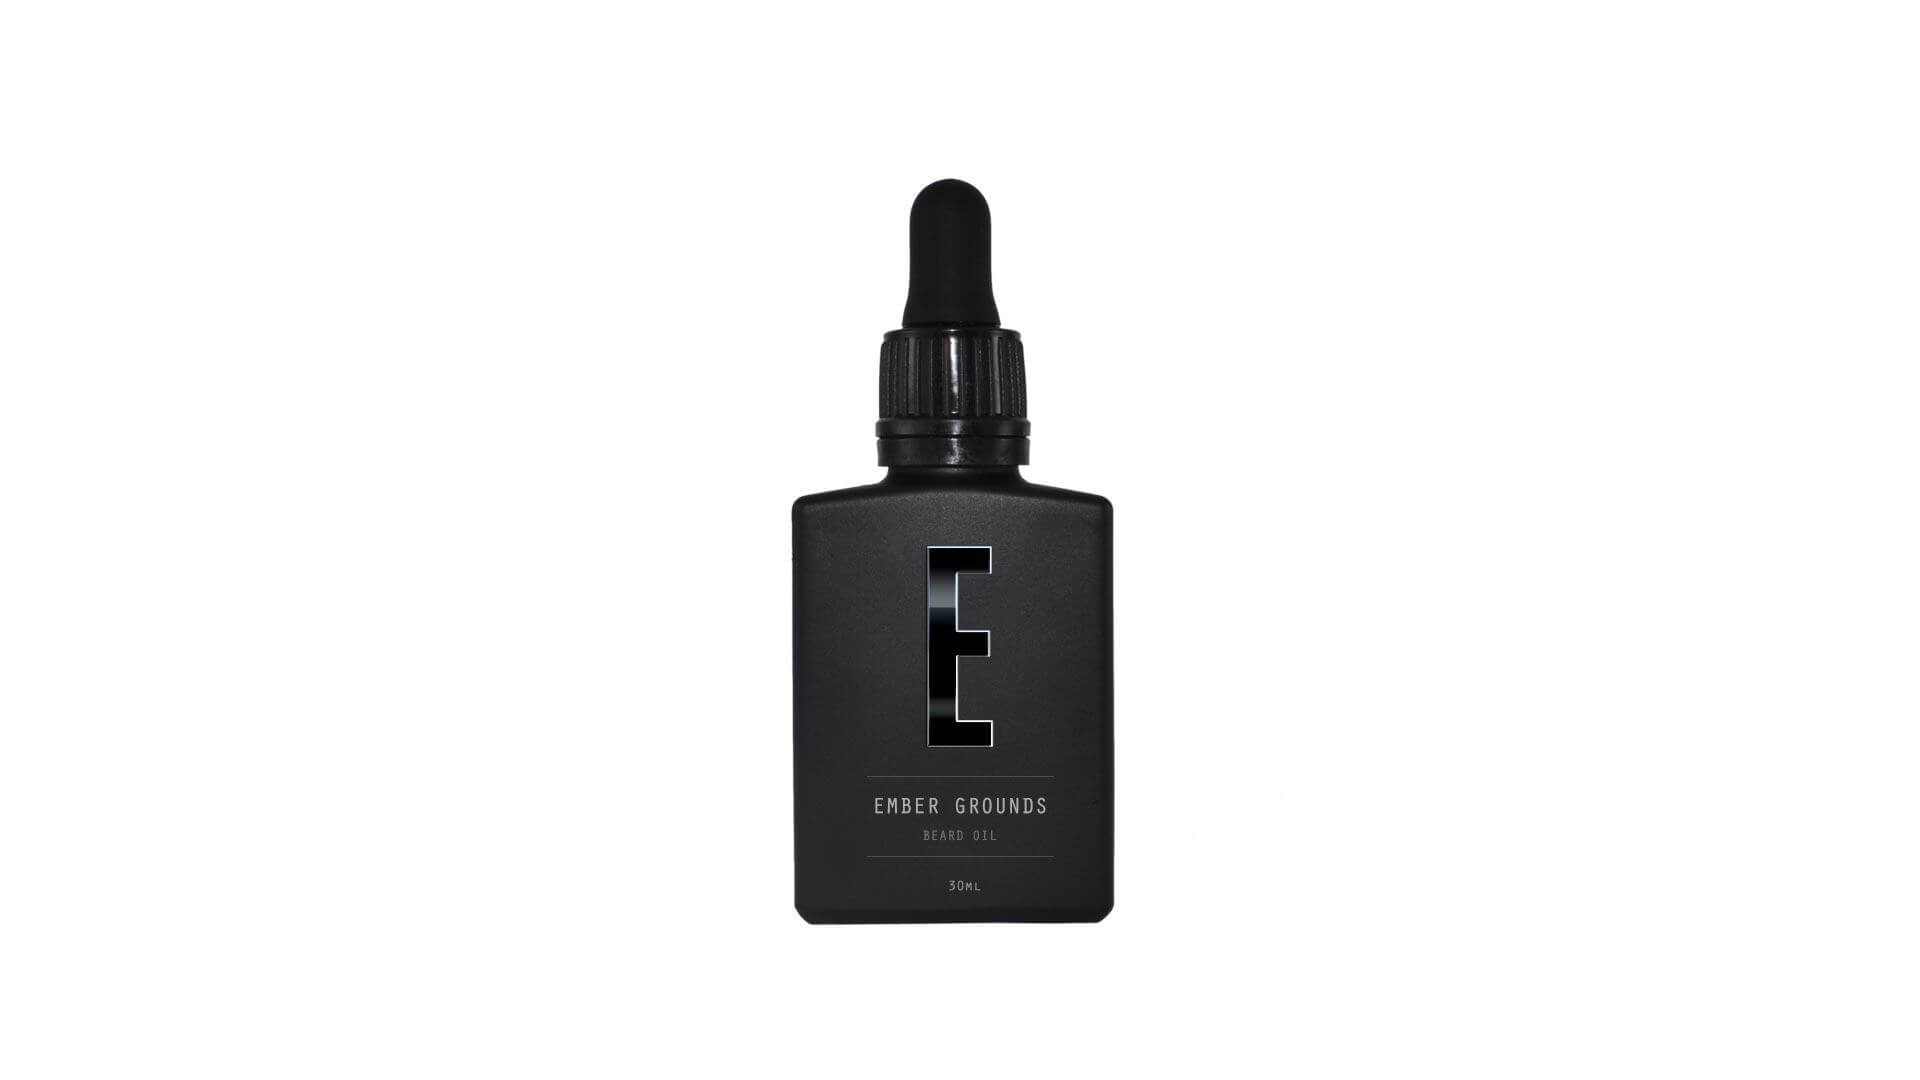 Single bottle of Ember Grounds Beard Oil - Premium beard care oil from Beardifulman